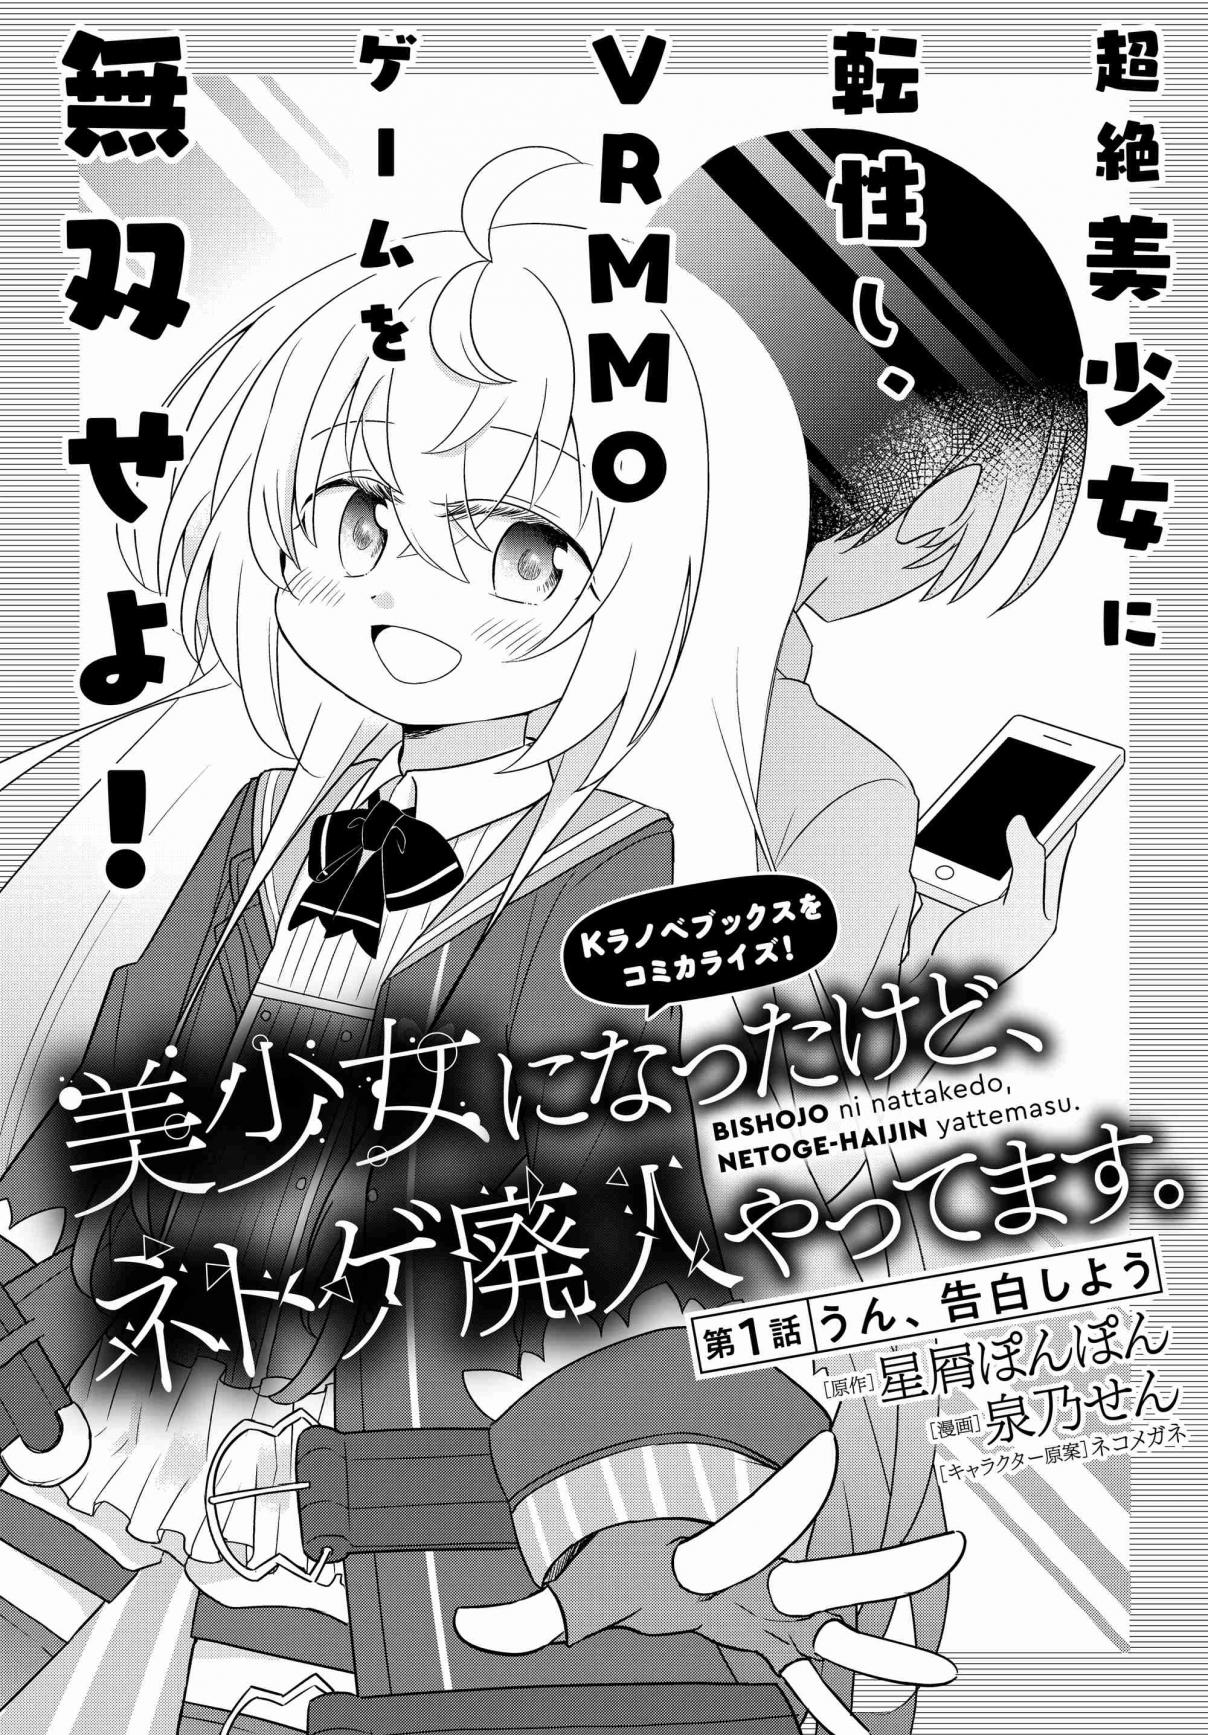 Bishoujo ni Natta kedo, Netoge Haijin Yattemasu Vol. 1 Ch. 1 Alright, let's confess!